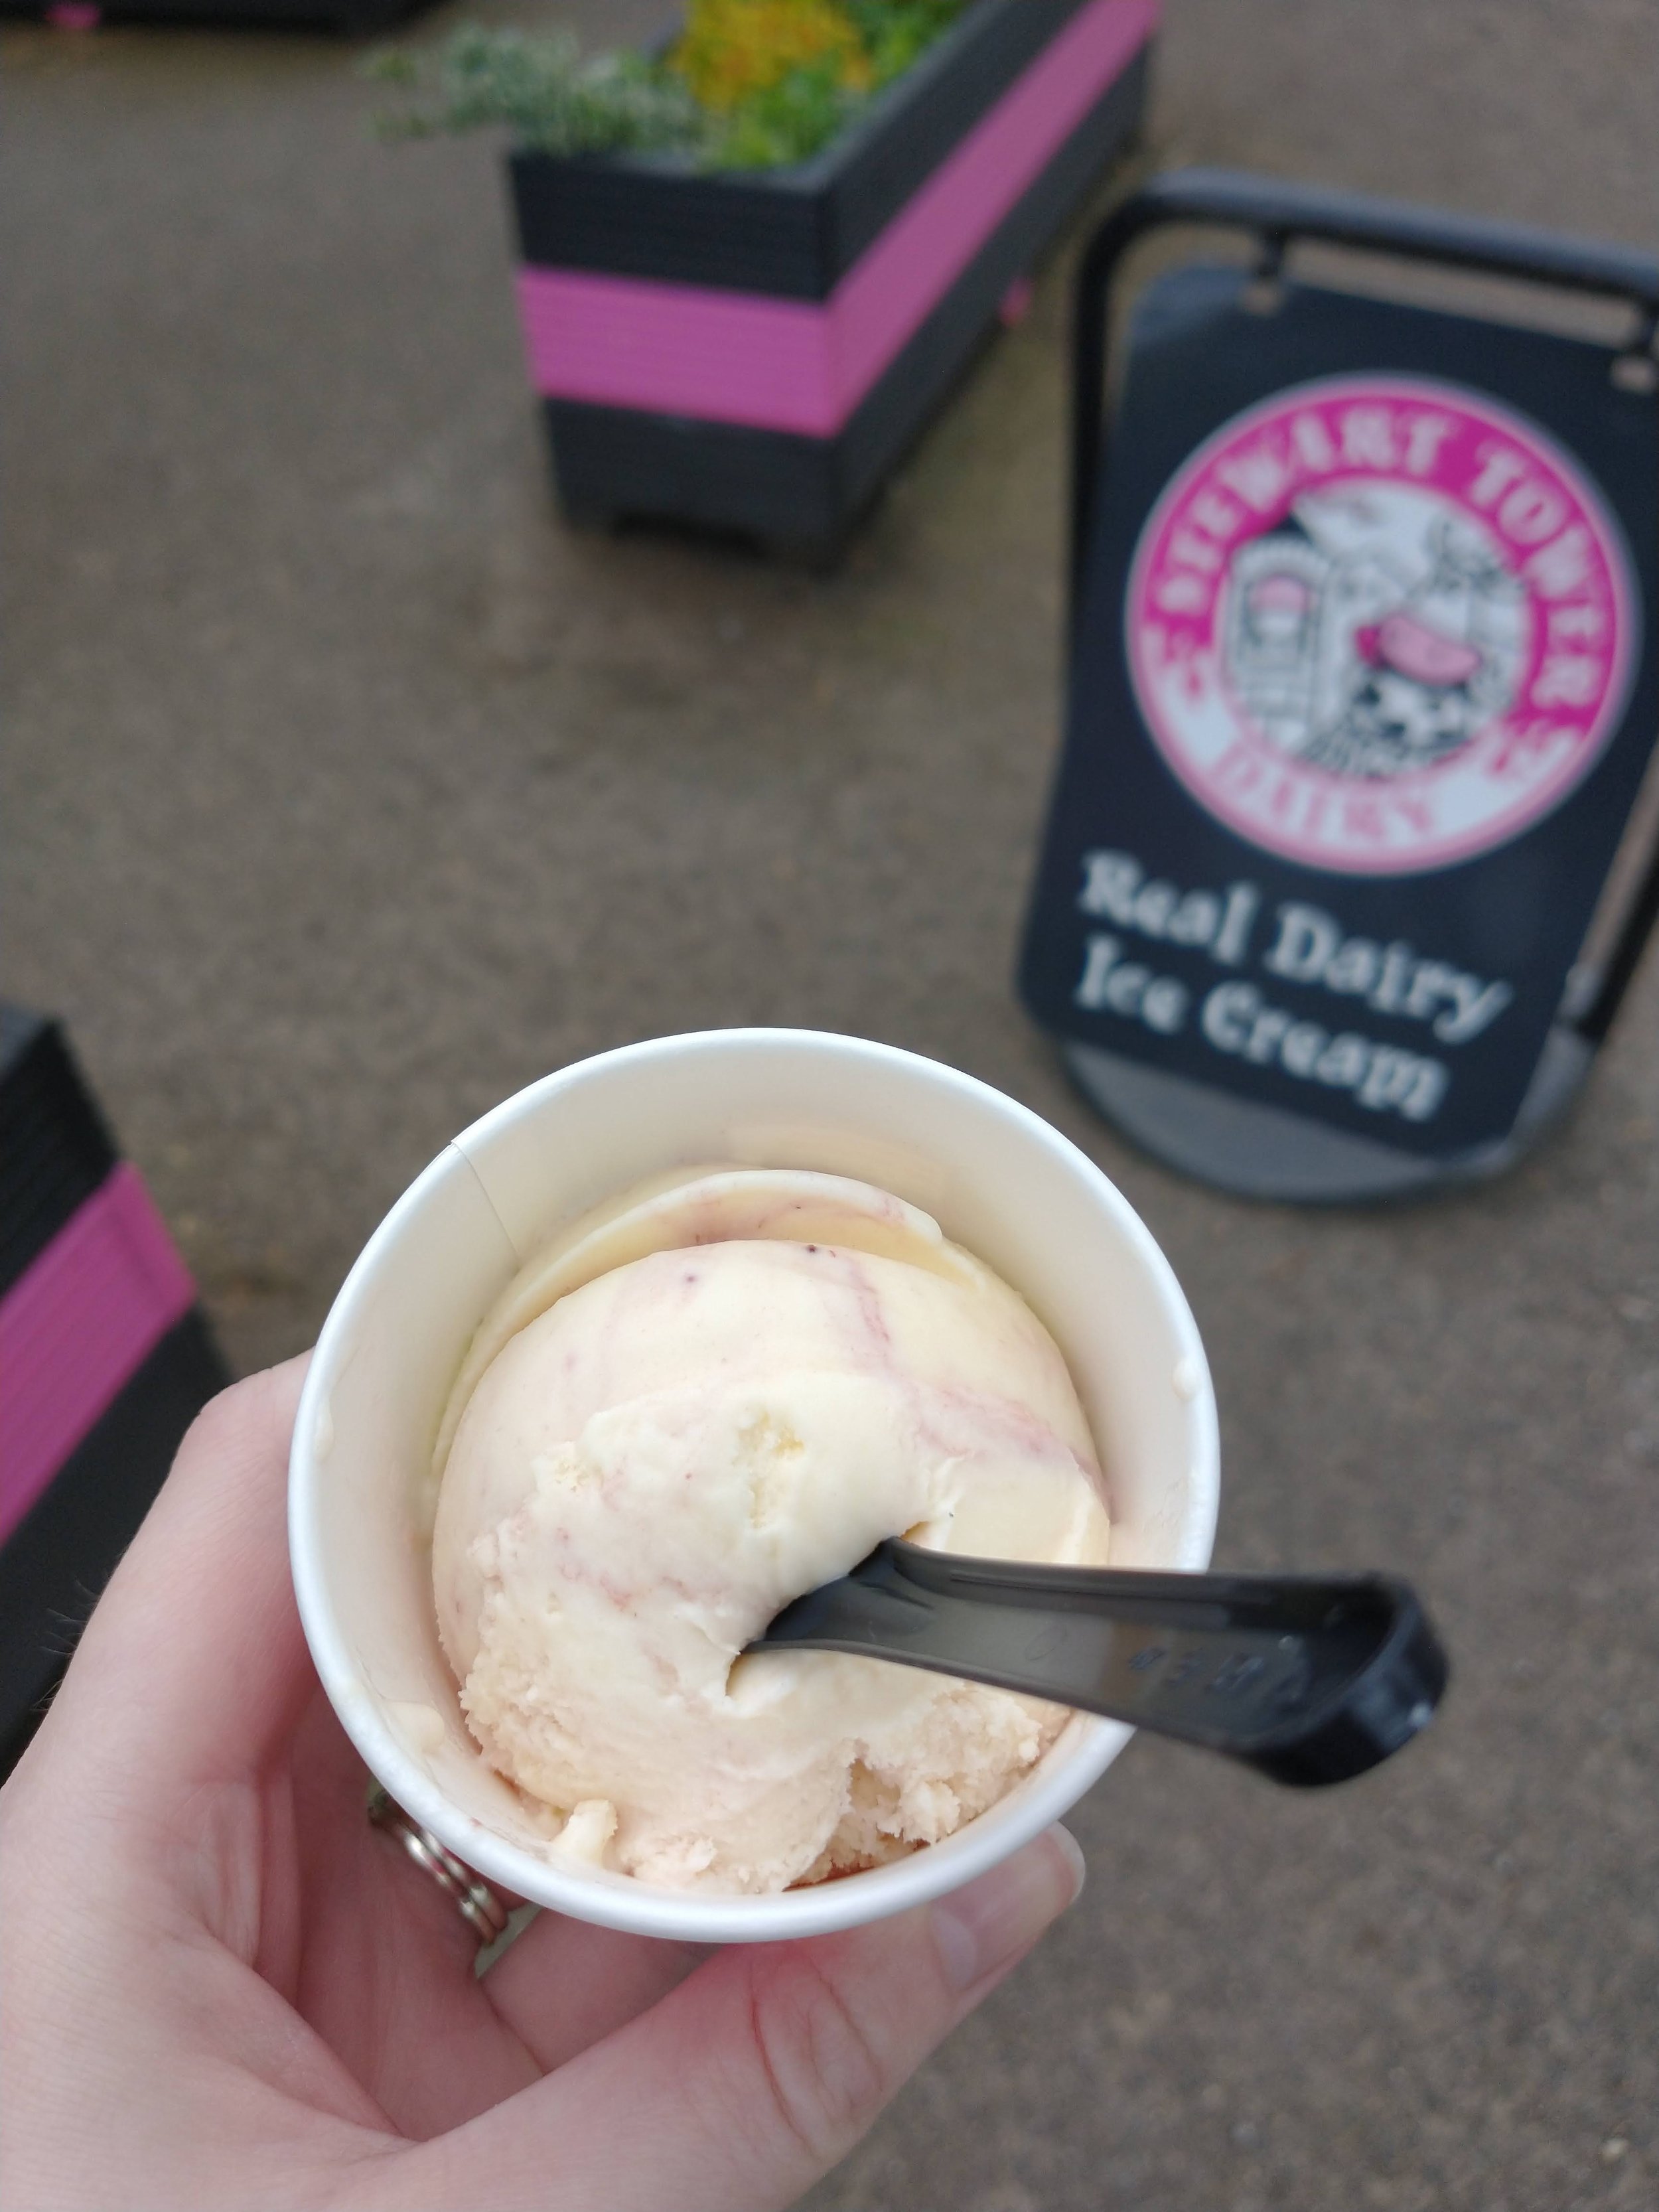 ice-cream-from-stuart-tower-on-the-way-to-edinburgh-scotland